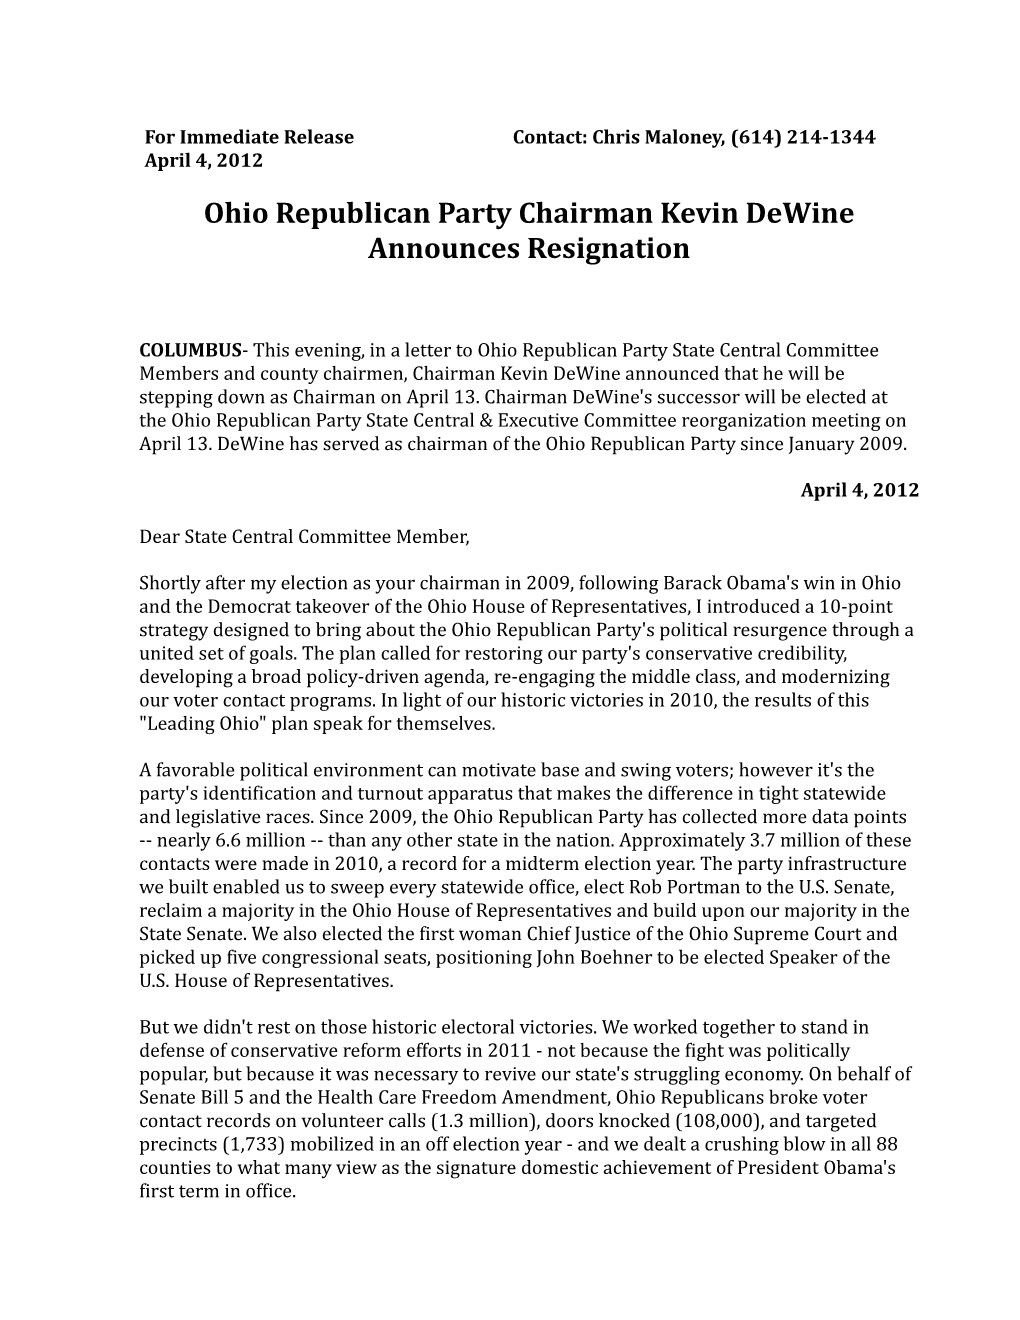 Ohio Republican Party Chairman Kevin Dewine Announces Resignation